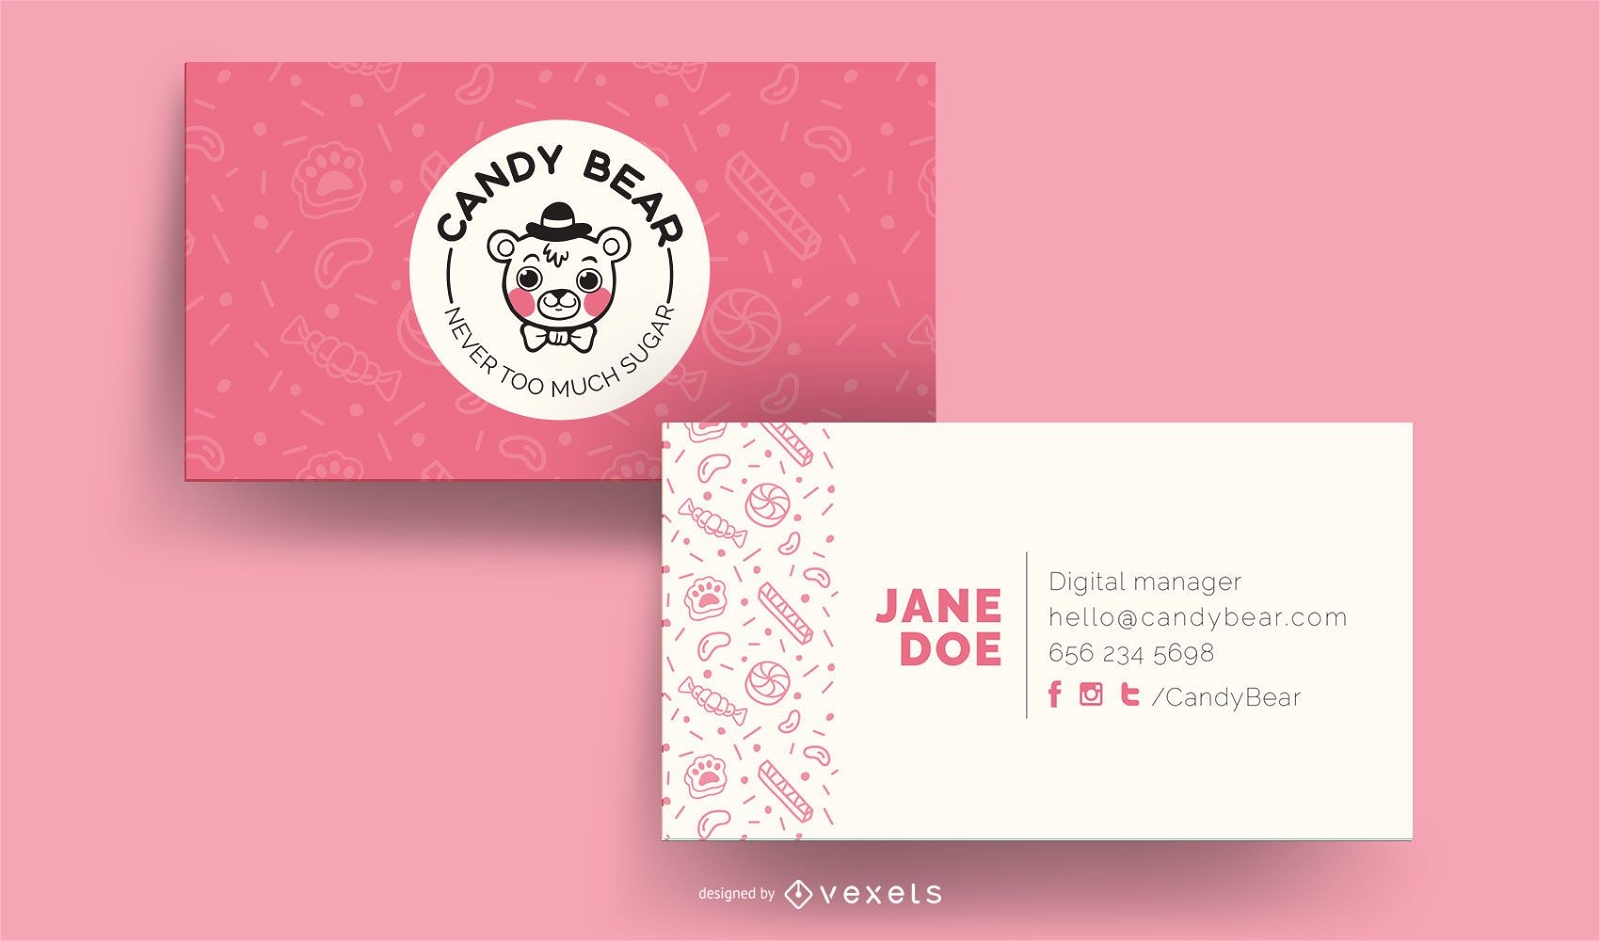 Plantilla de tarjeta de visita de Candy Bear